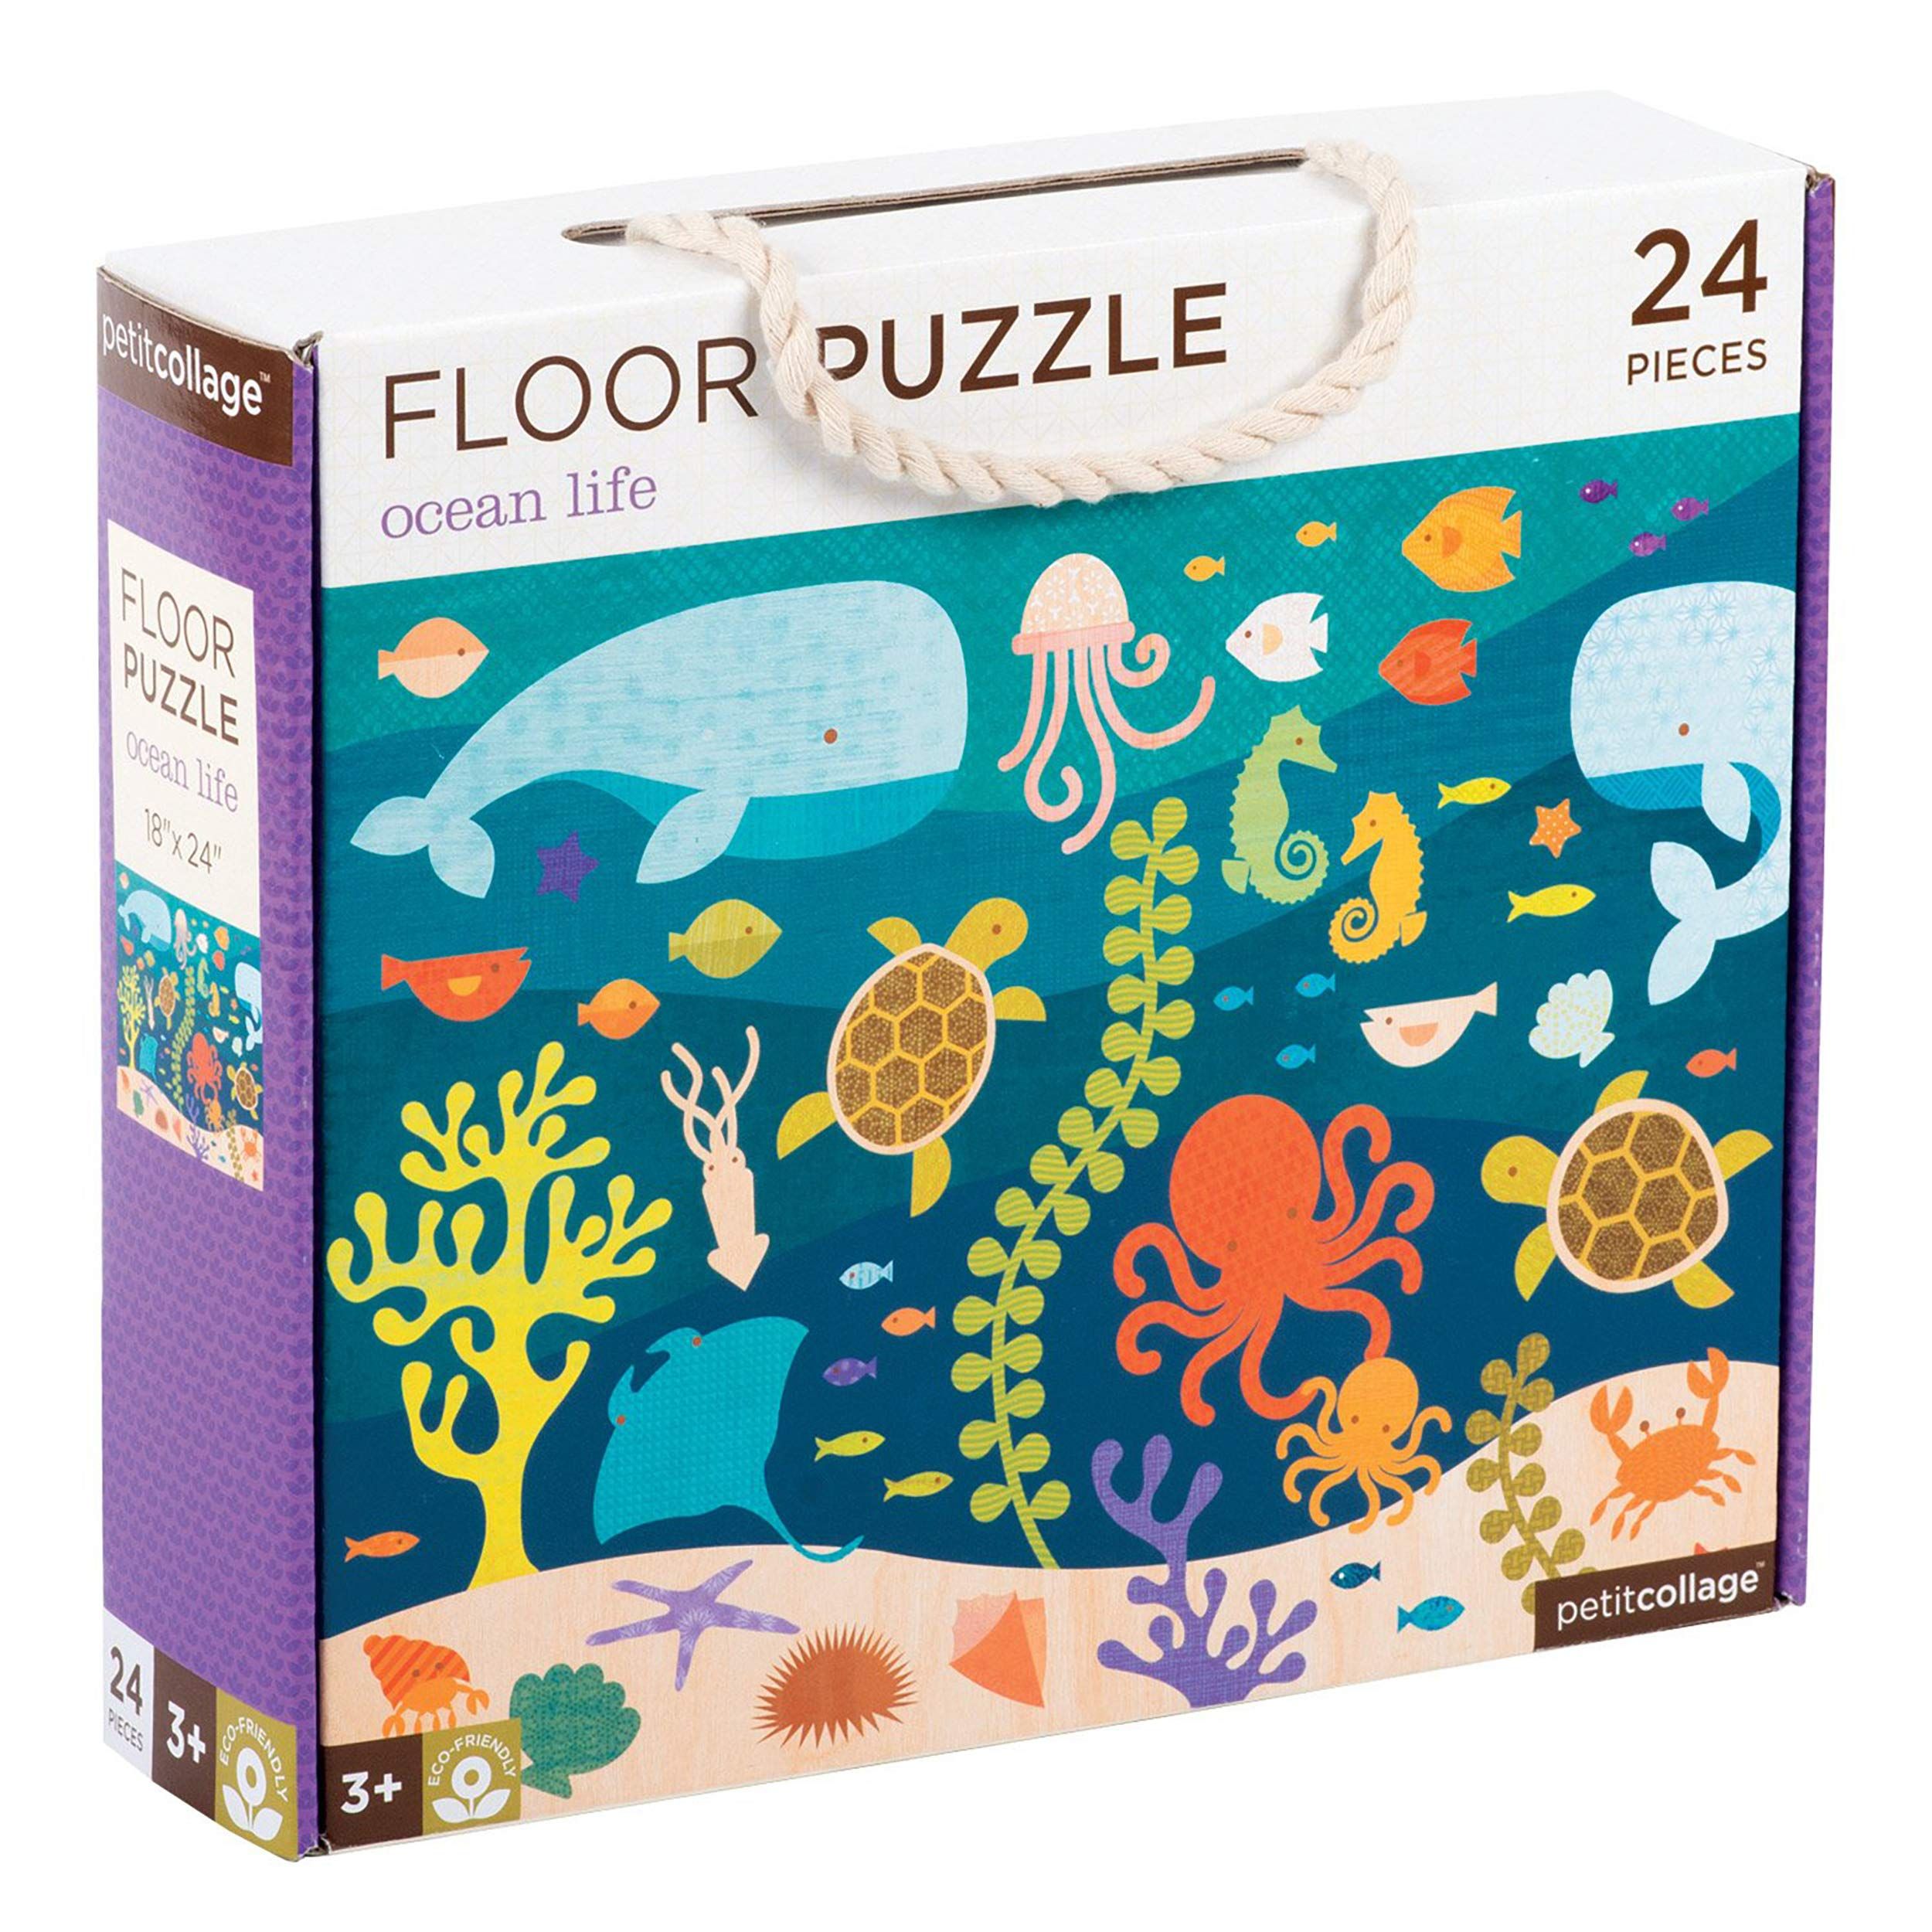 Petit Collage Floor Puzzle, Ocean Life Friends, 24-Pieces – Large Puzzle for Kids, Completed Ocean J | Amazon (US)